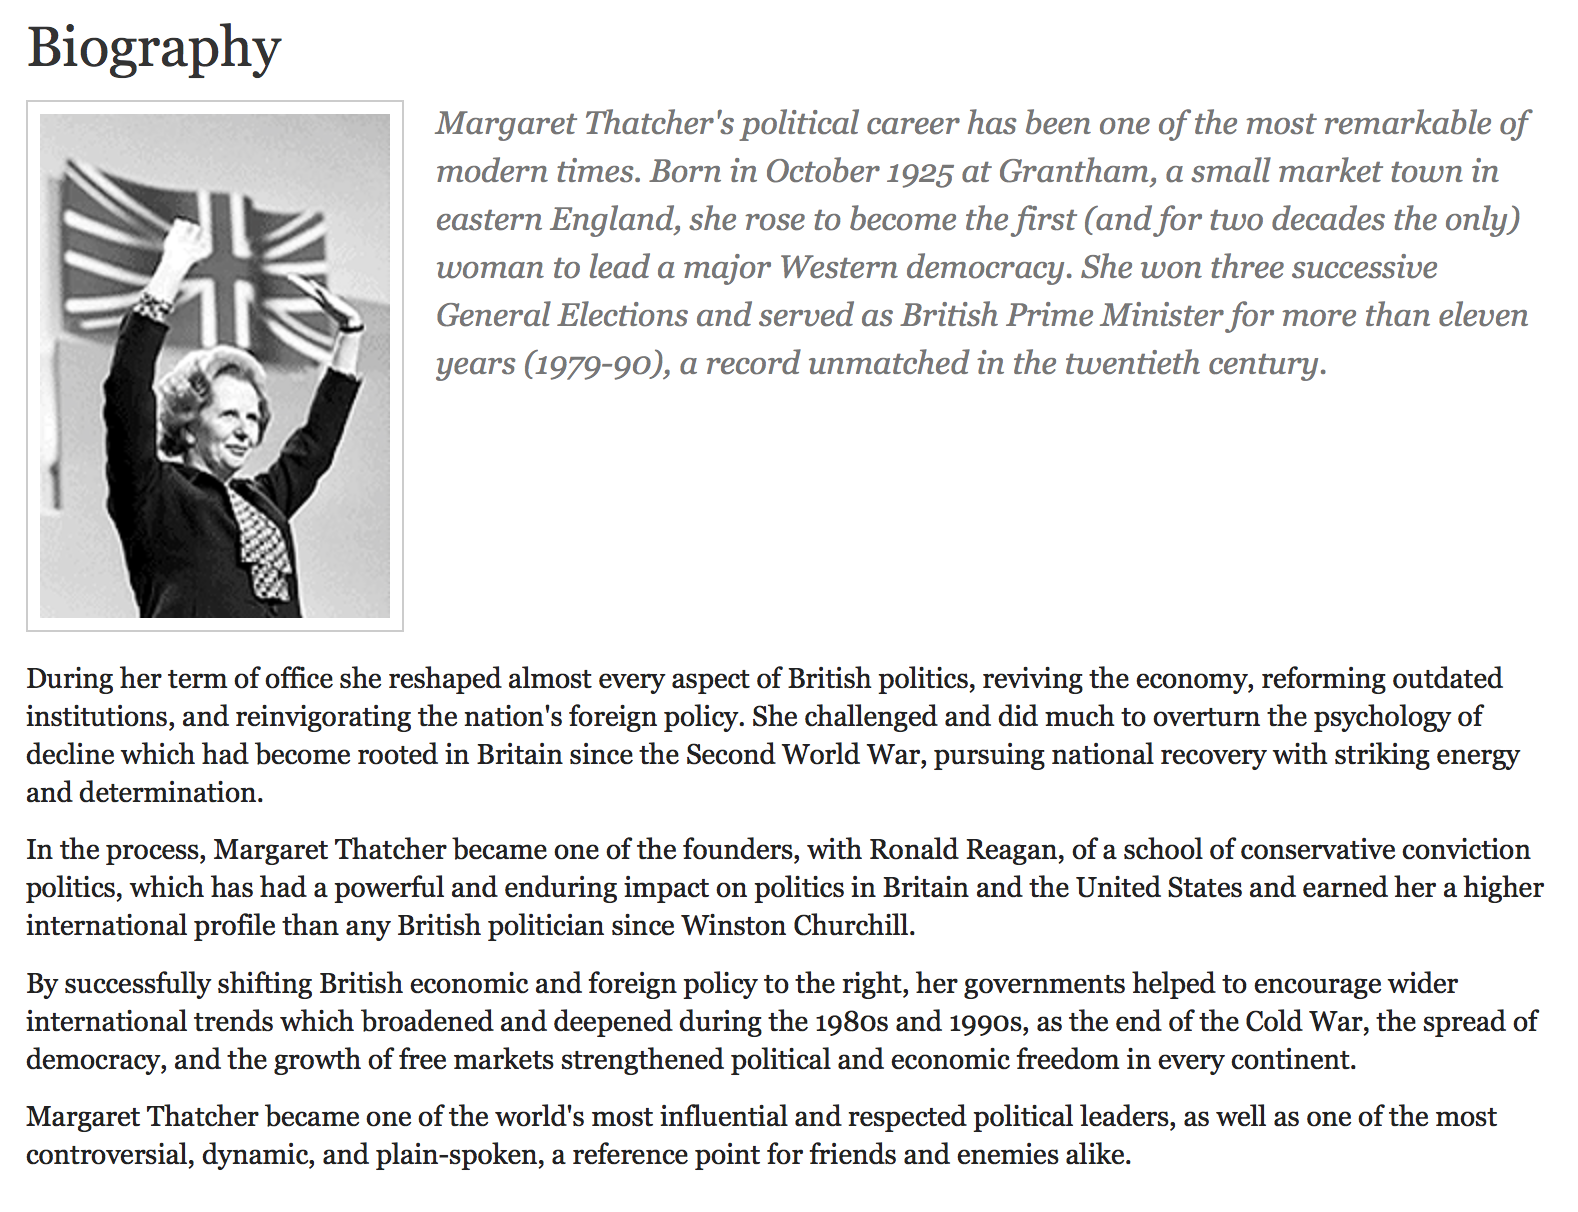 rhetorical analysis of margaret thatcher's speech